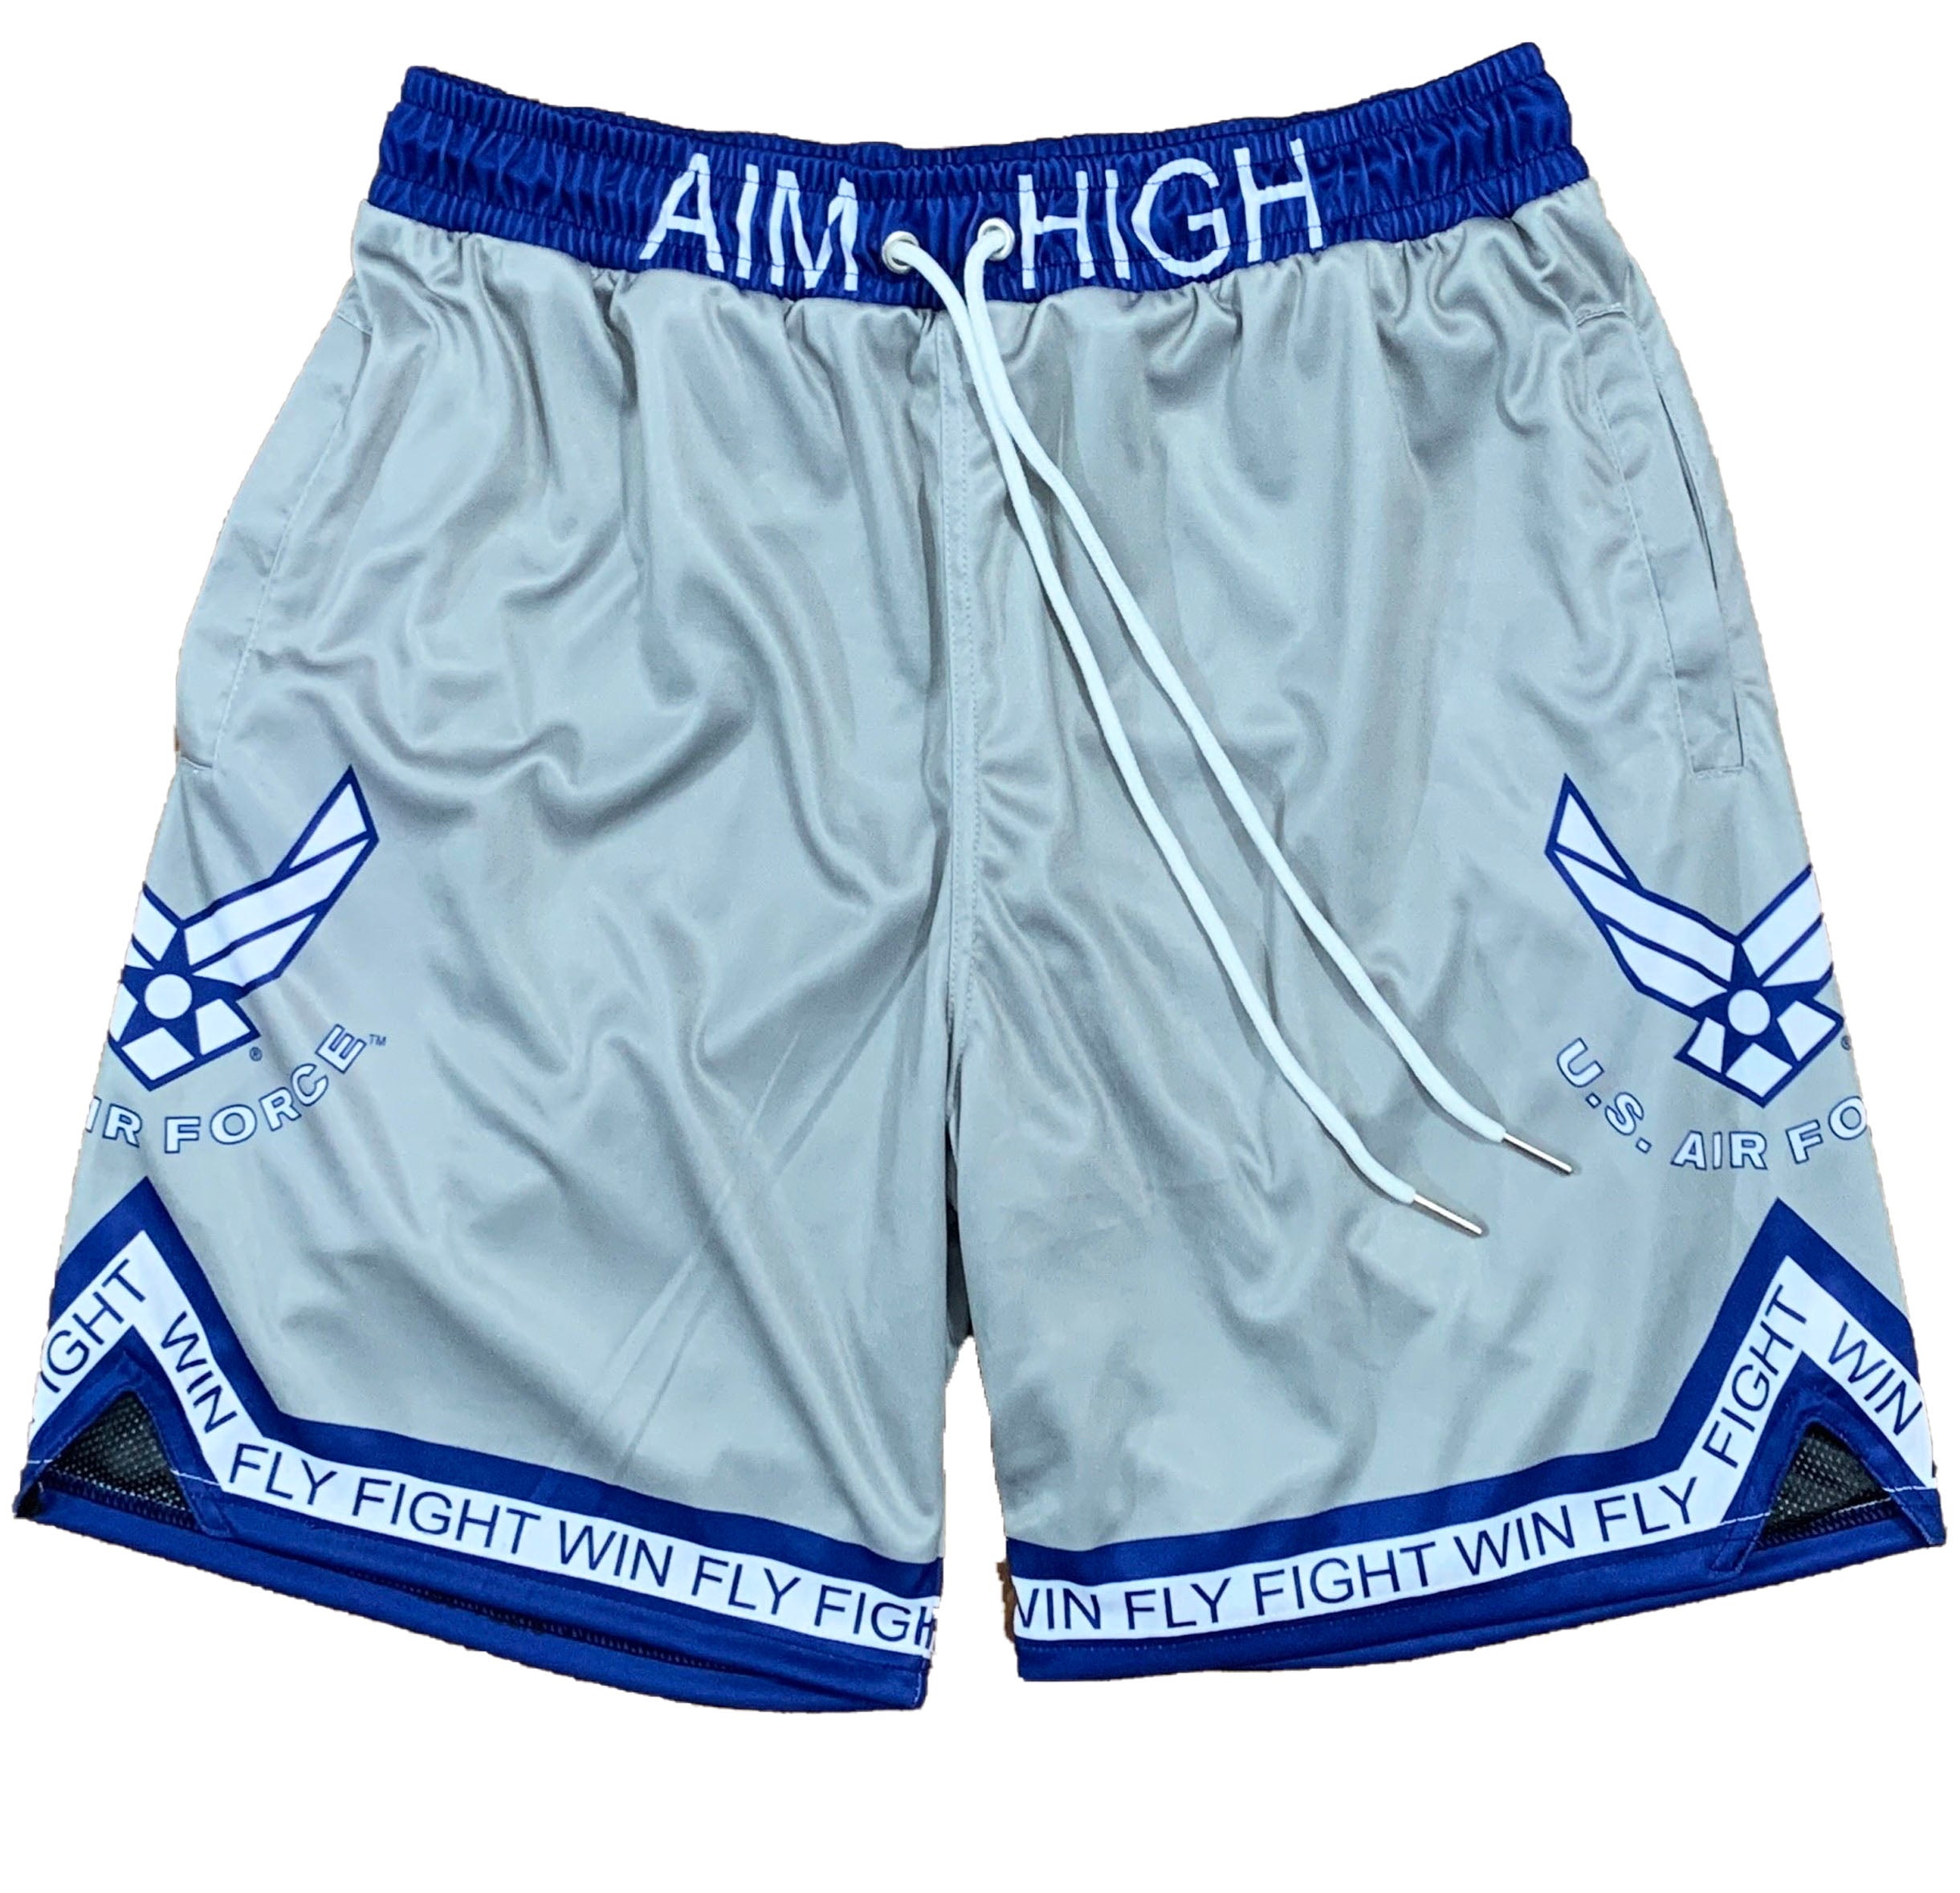 U.S. Air Force AIM HIGH Shorts (gry)